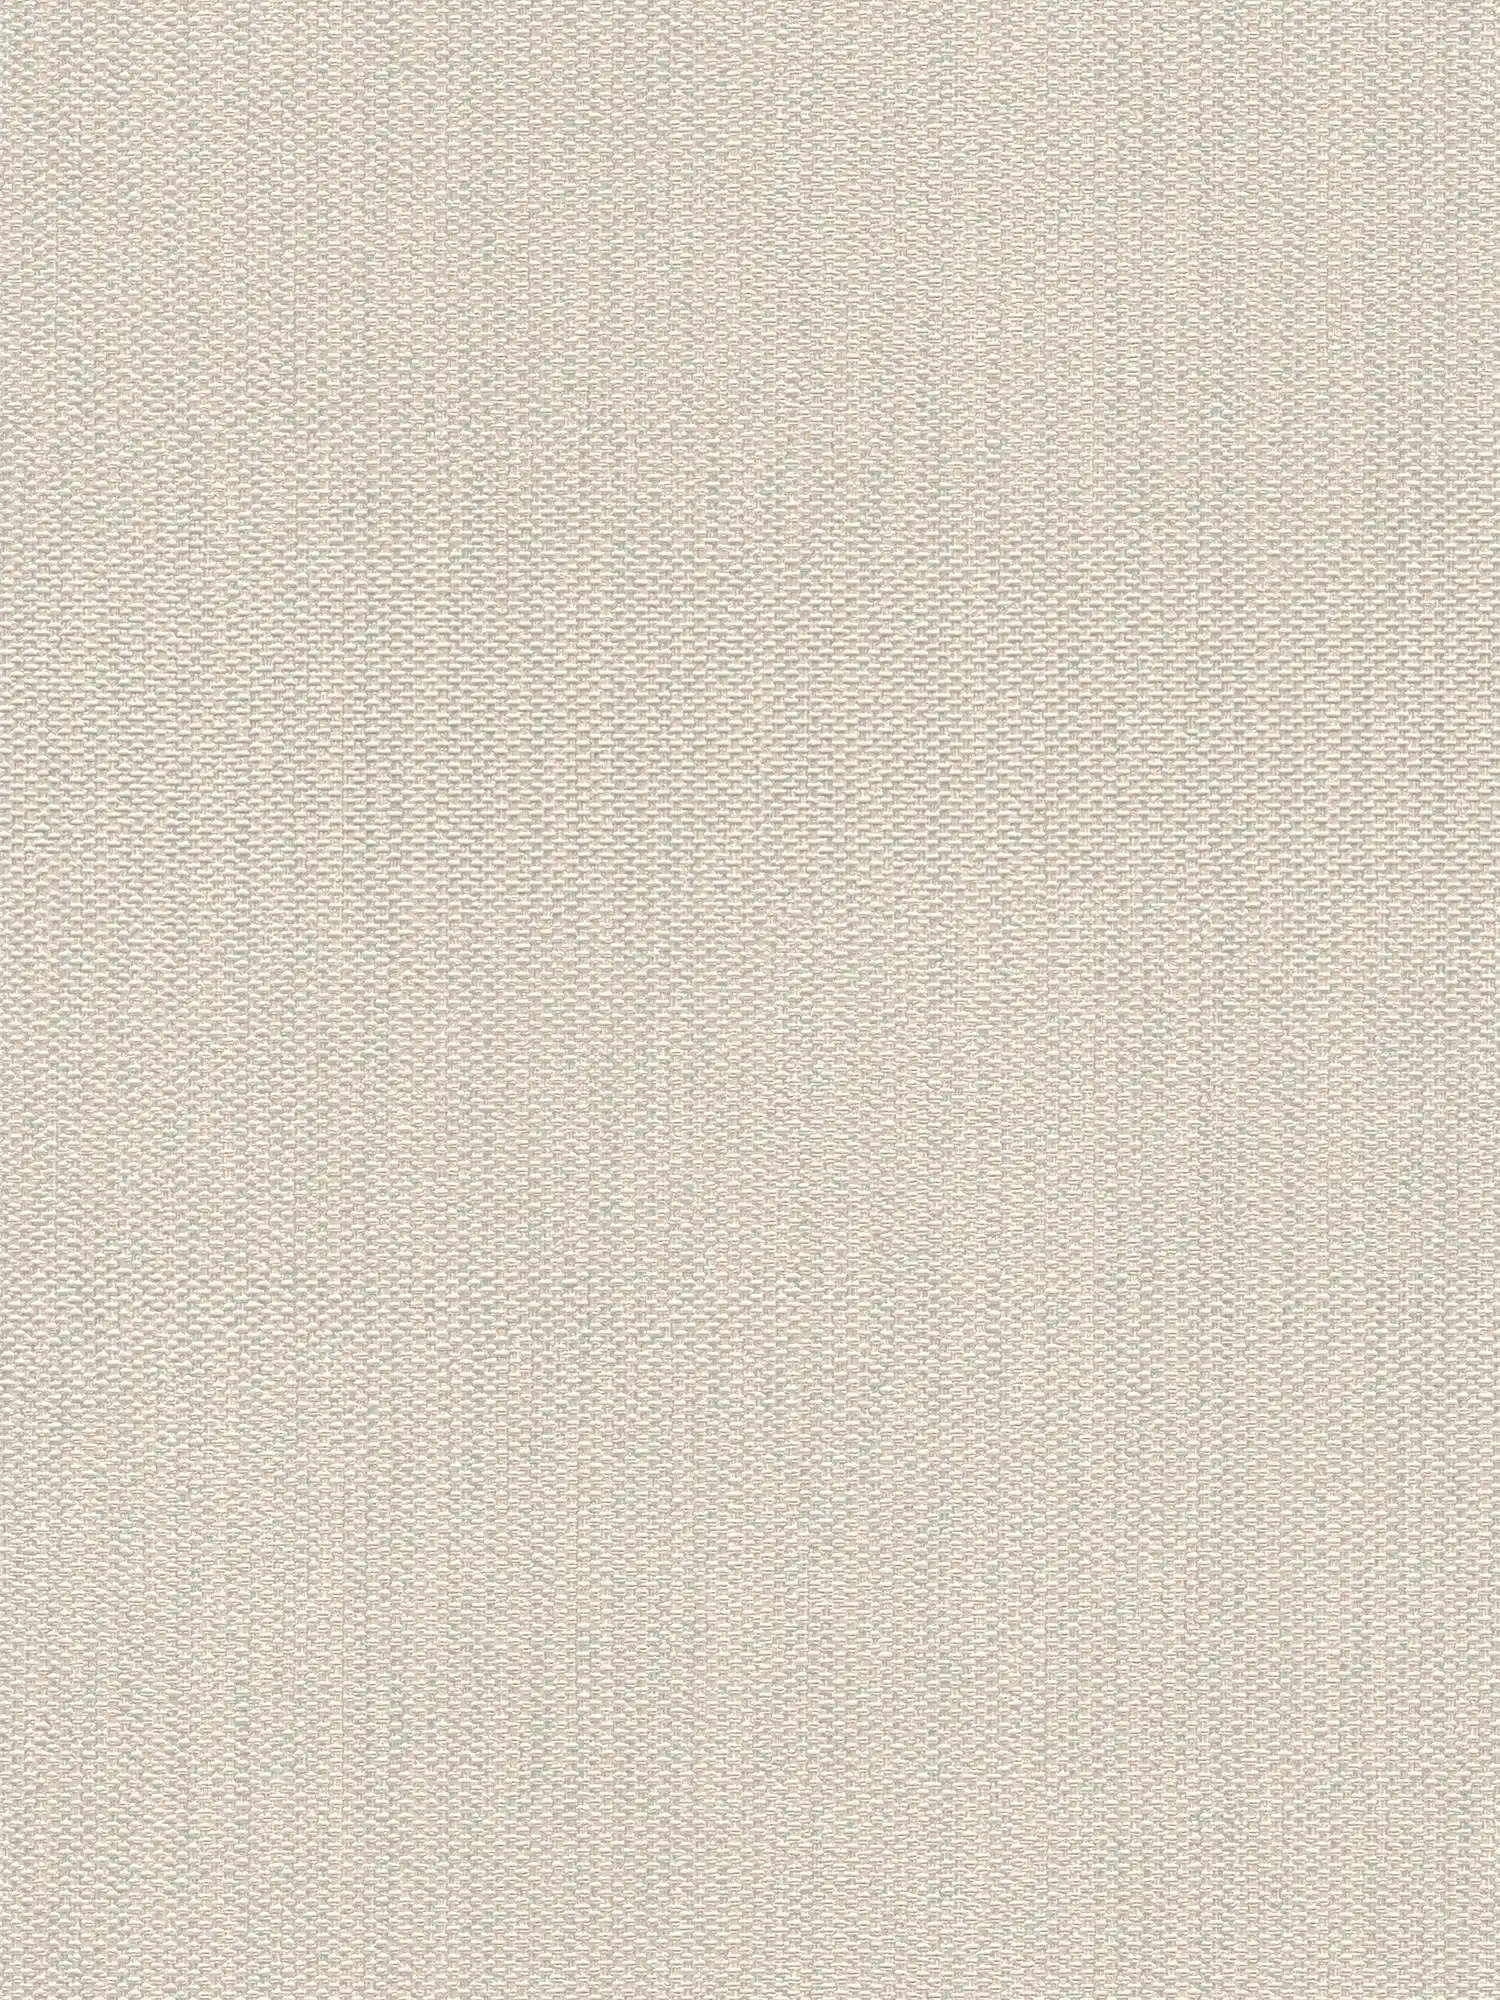 Papel pintado no tejido de aspecto textil - crema, gris
